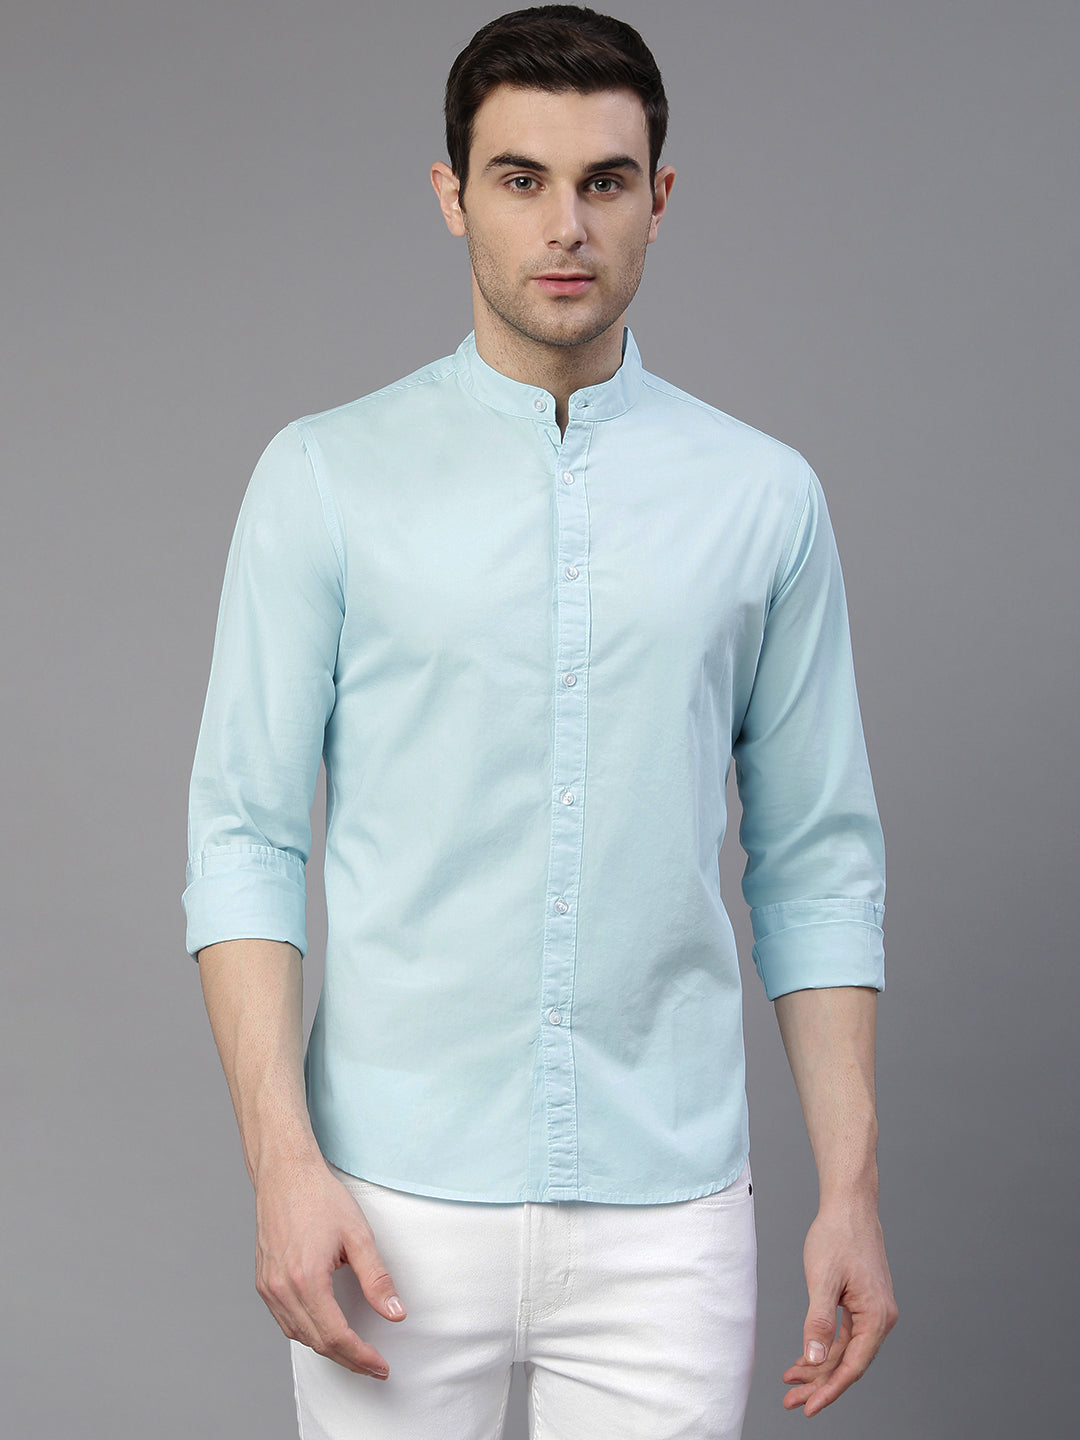 Dennis Lingo Men's Solid Chinese Collar Tblue Casual Shirt – DENNIS LINGO